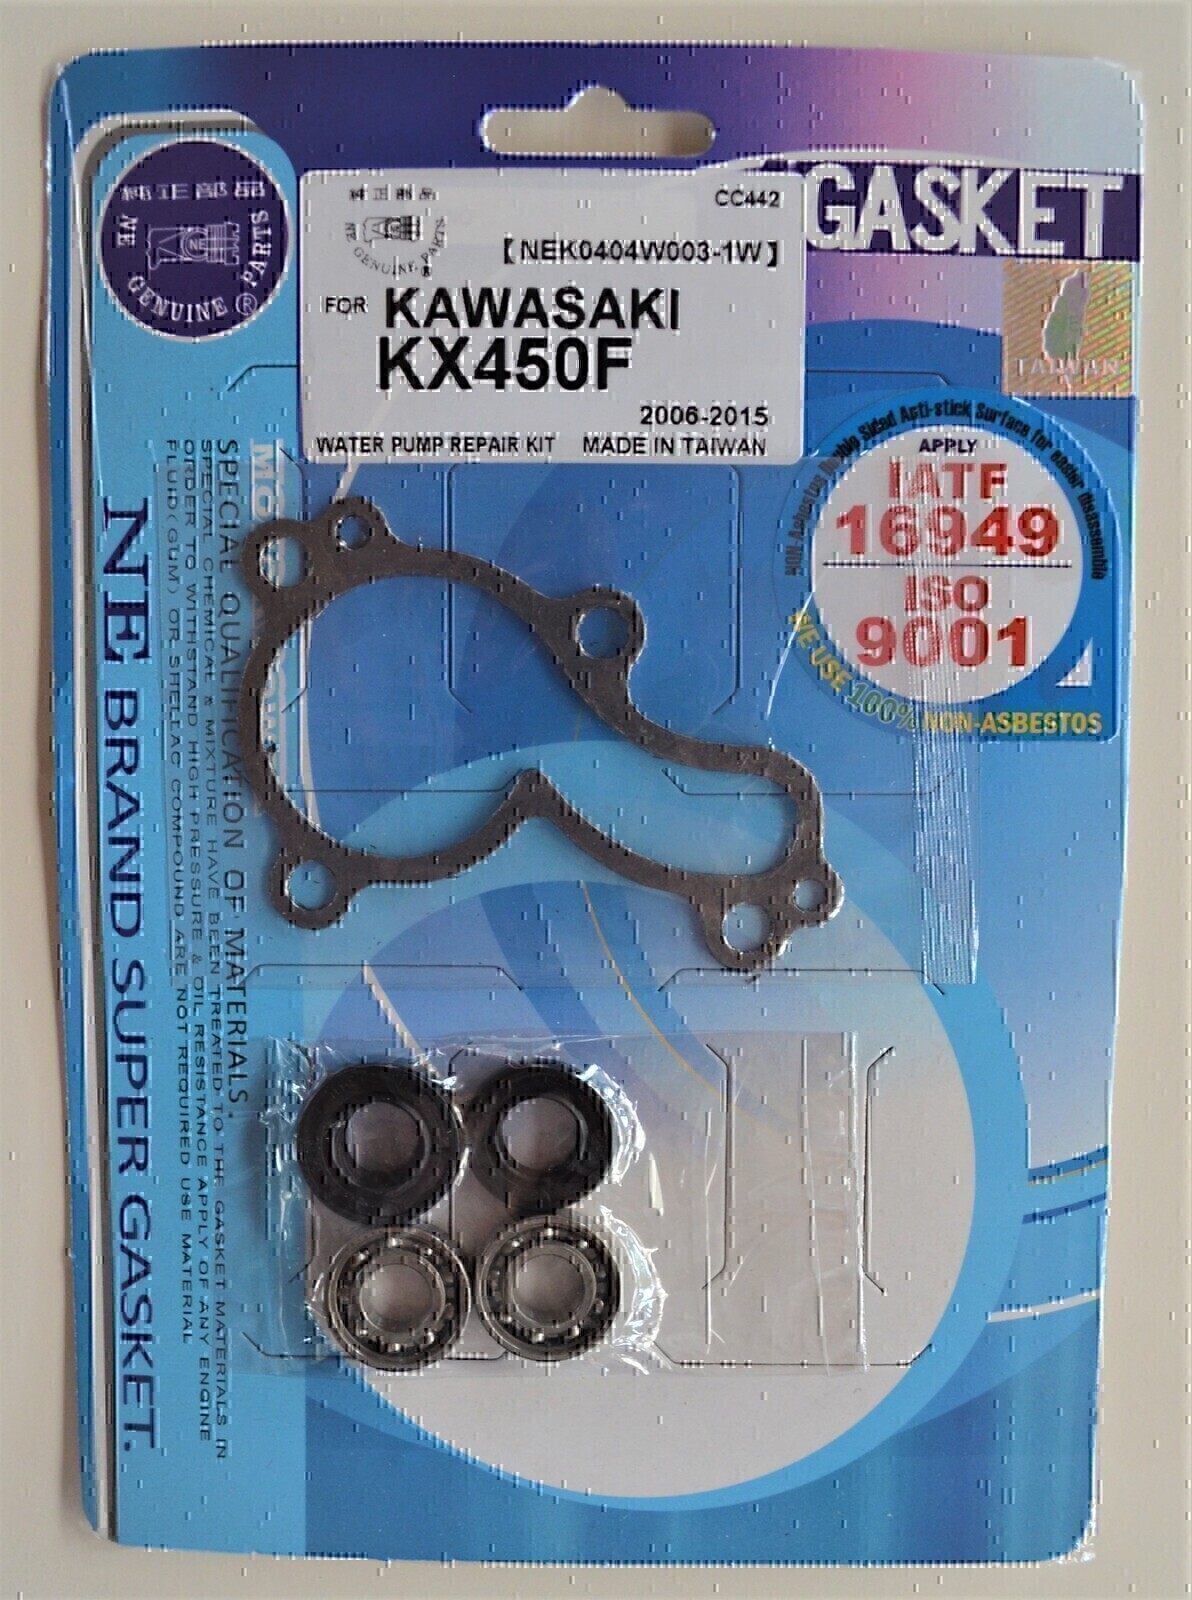 WATER PUMP REPAIR KIT FOR KAWASAKI KX450F 2006 - 2015 KLX450R 2008 - 2013